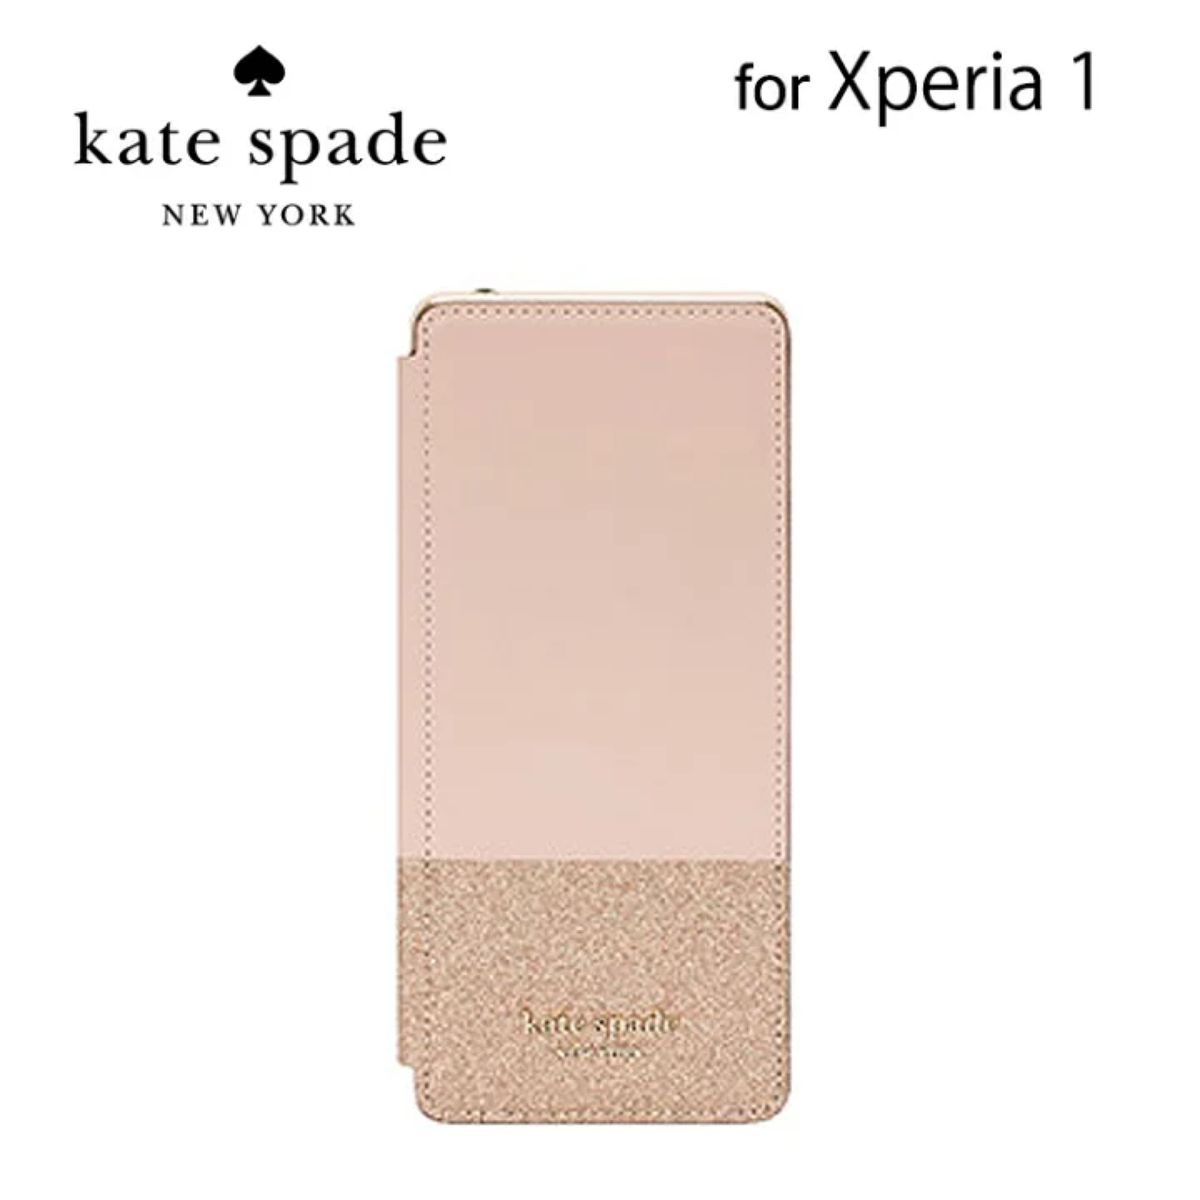 【新品未使用】Xperia1用 kate spade 手帳型ケース